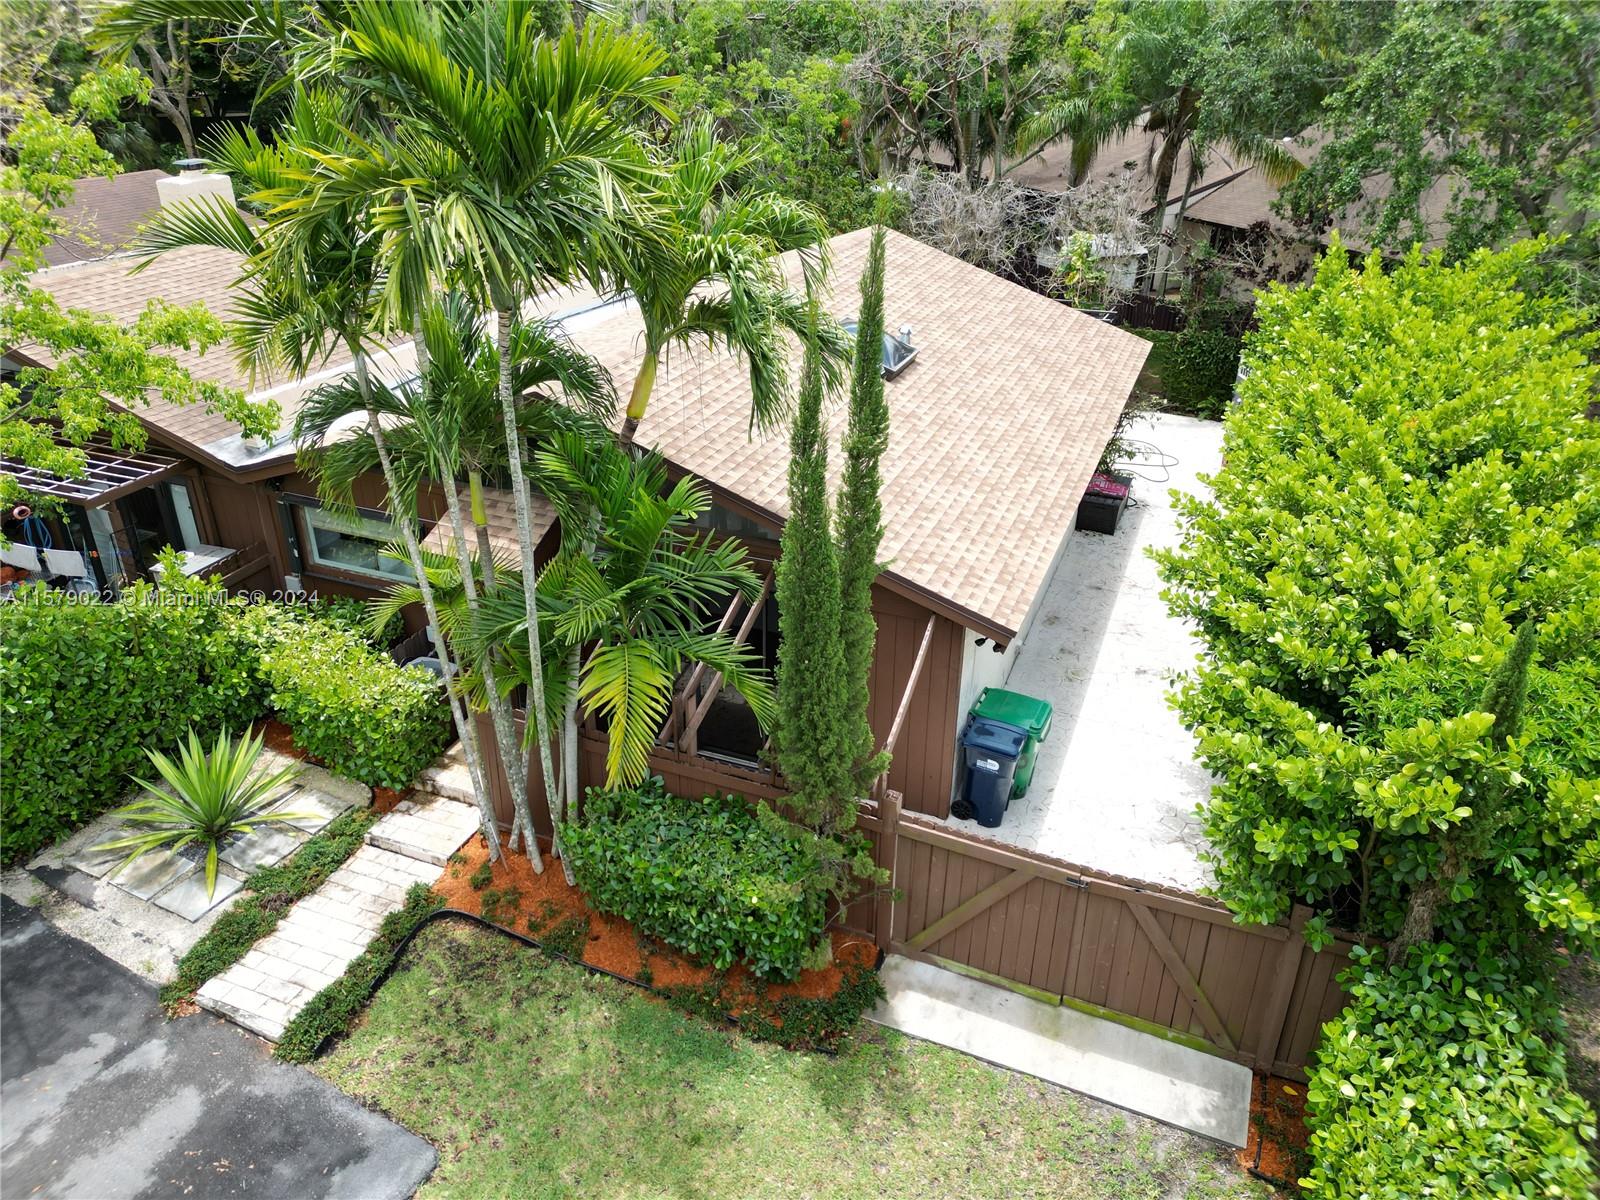 Property for Sale at 11340 Sw 114th Lane Cir Cir, Miami, Broward County, Florida - Bedrooms: 2 
Bathrooms: 2  - $512,000